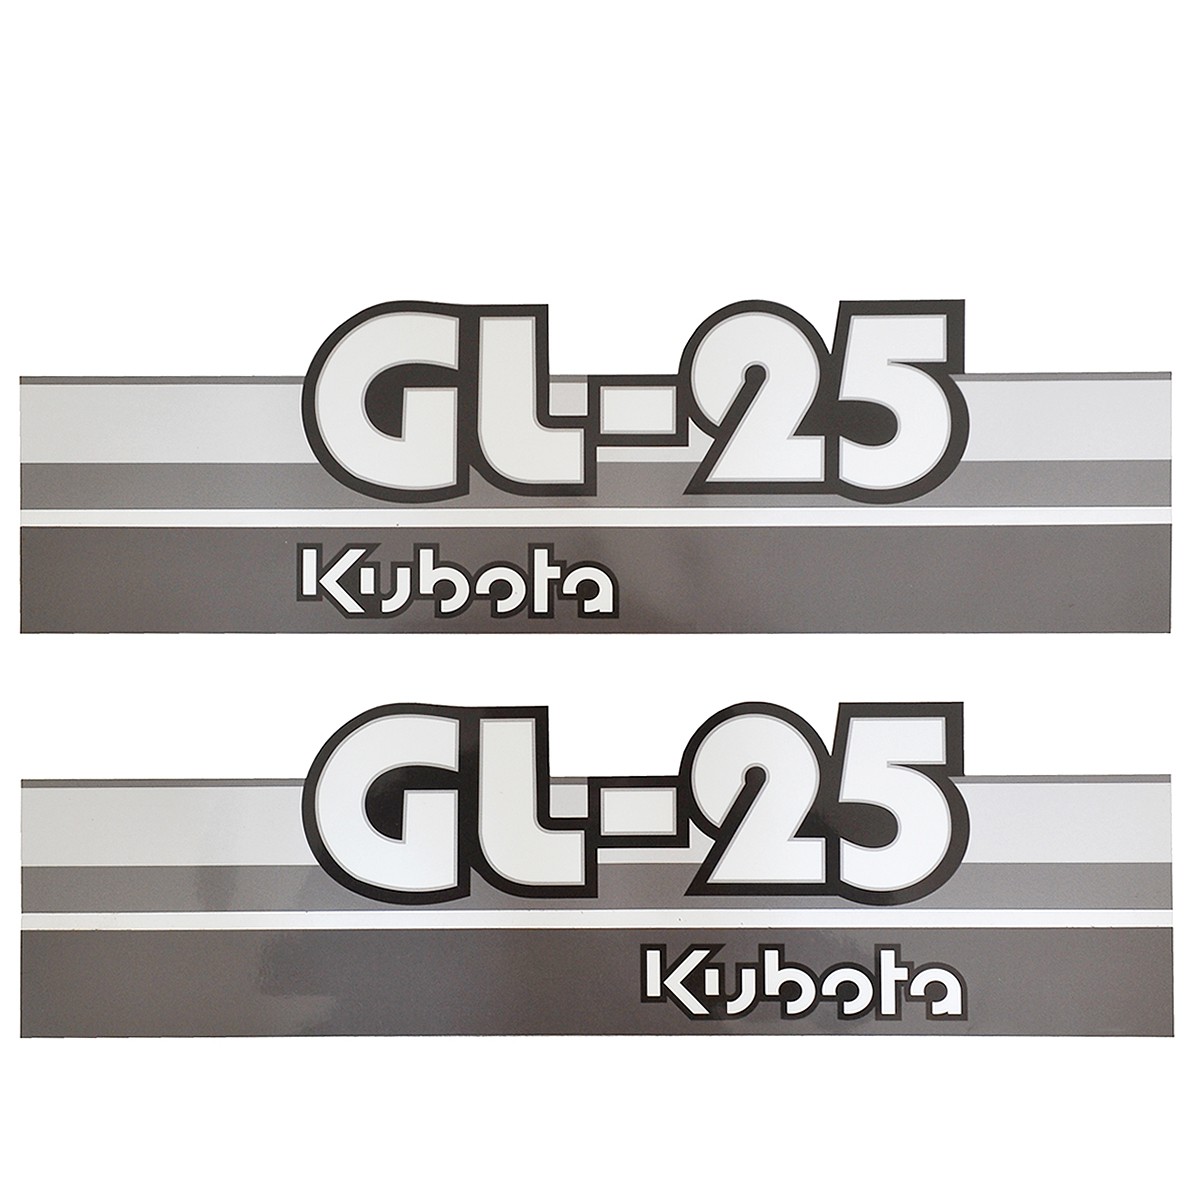 Autocollants Kubota GL25